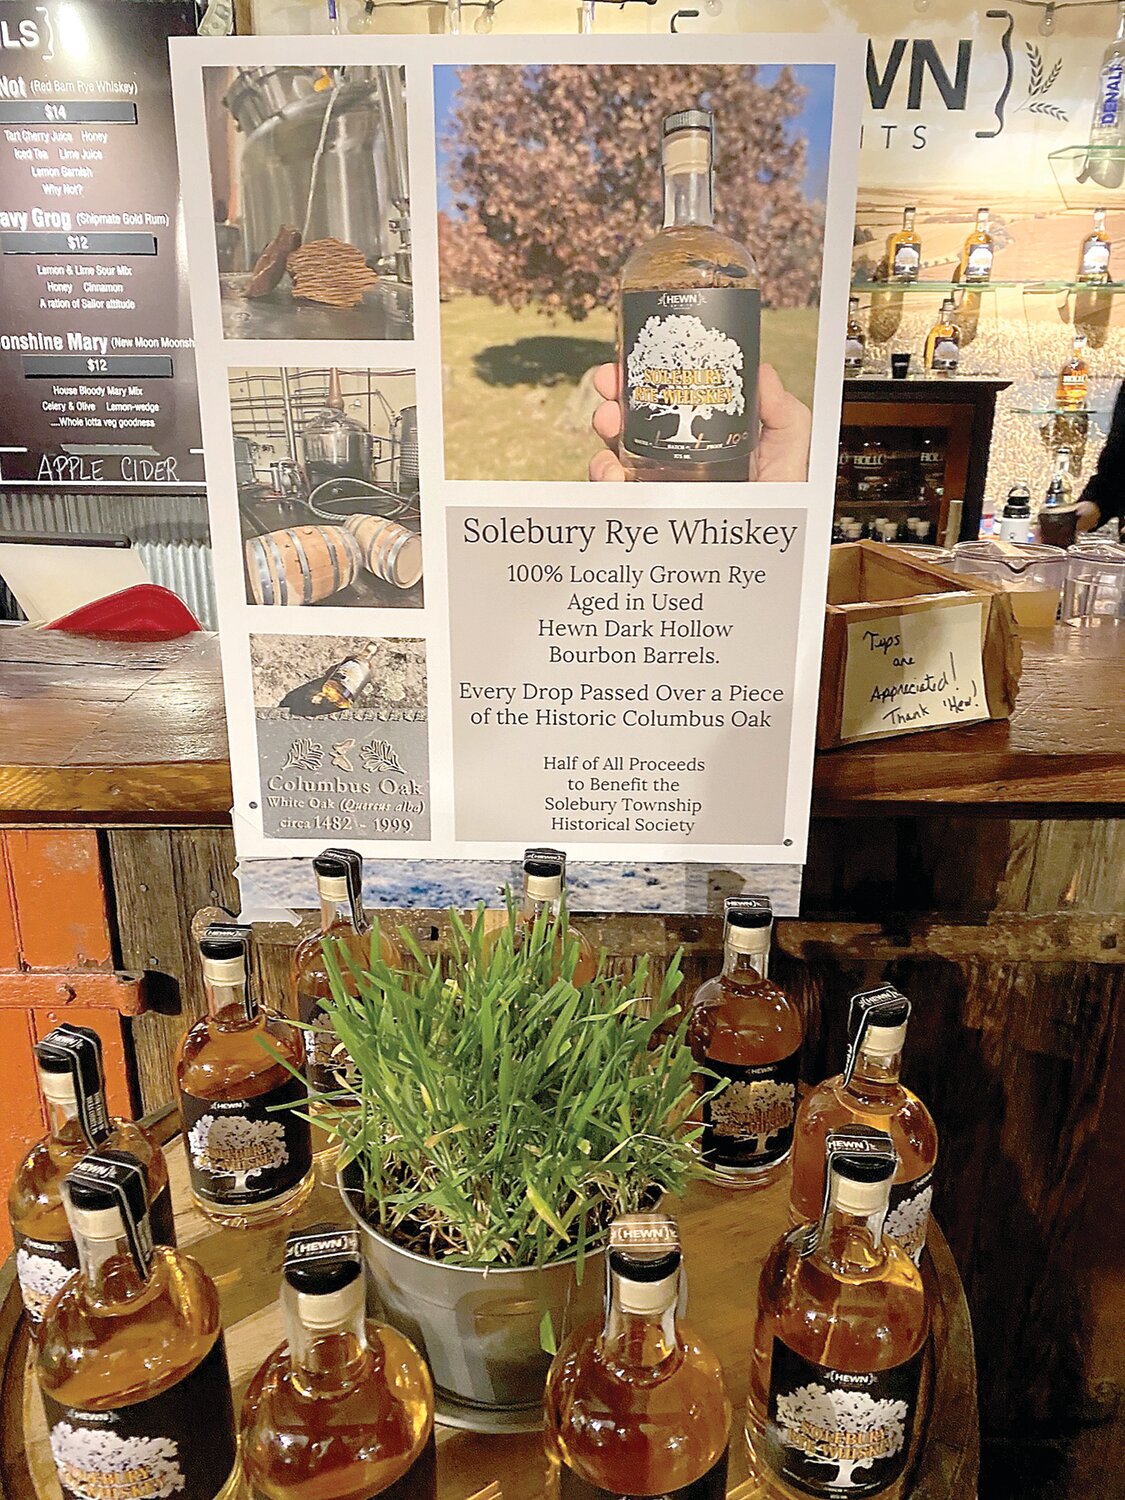 A Solebury Rye Whiskey display.